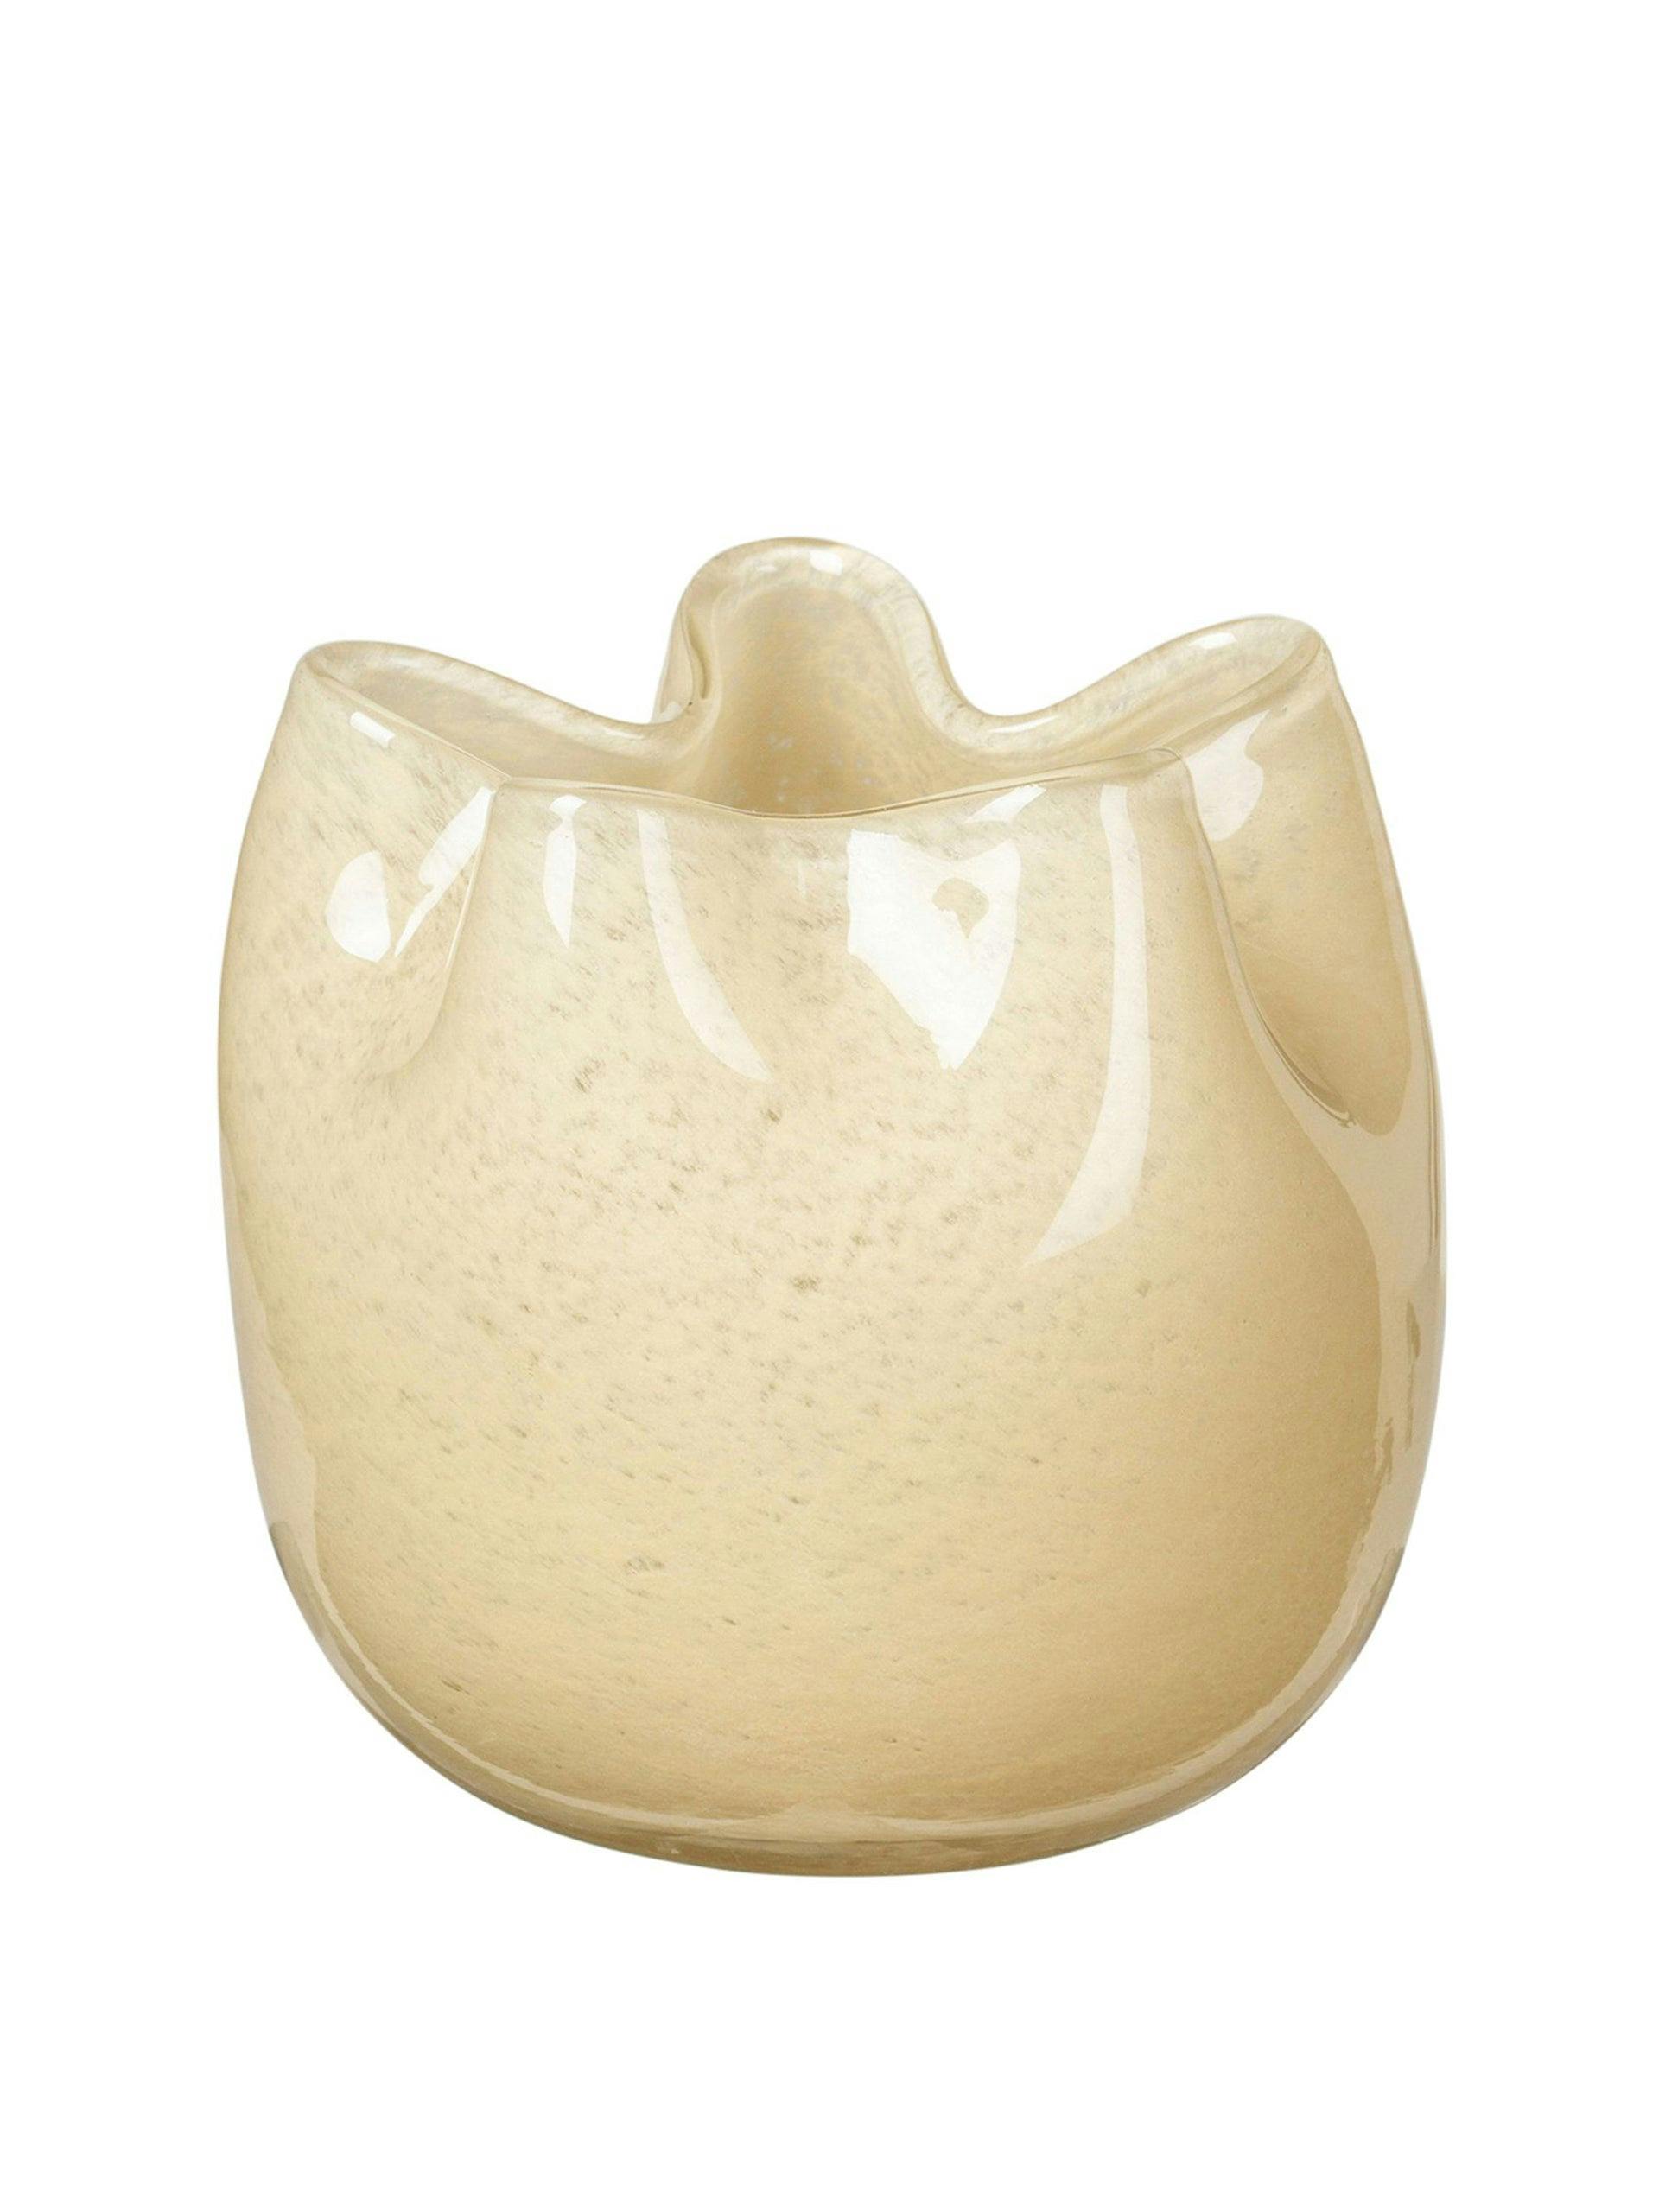 Esther glass vase